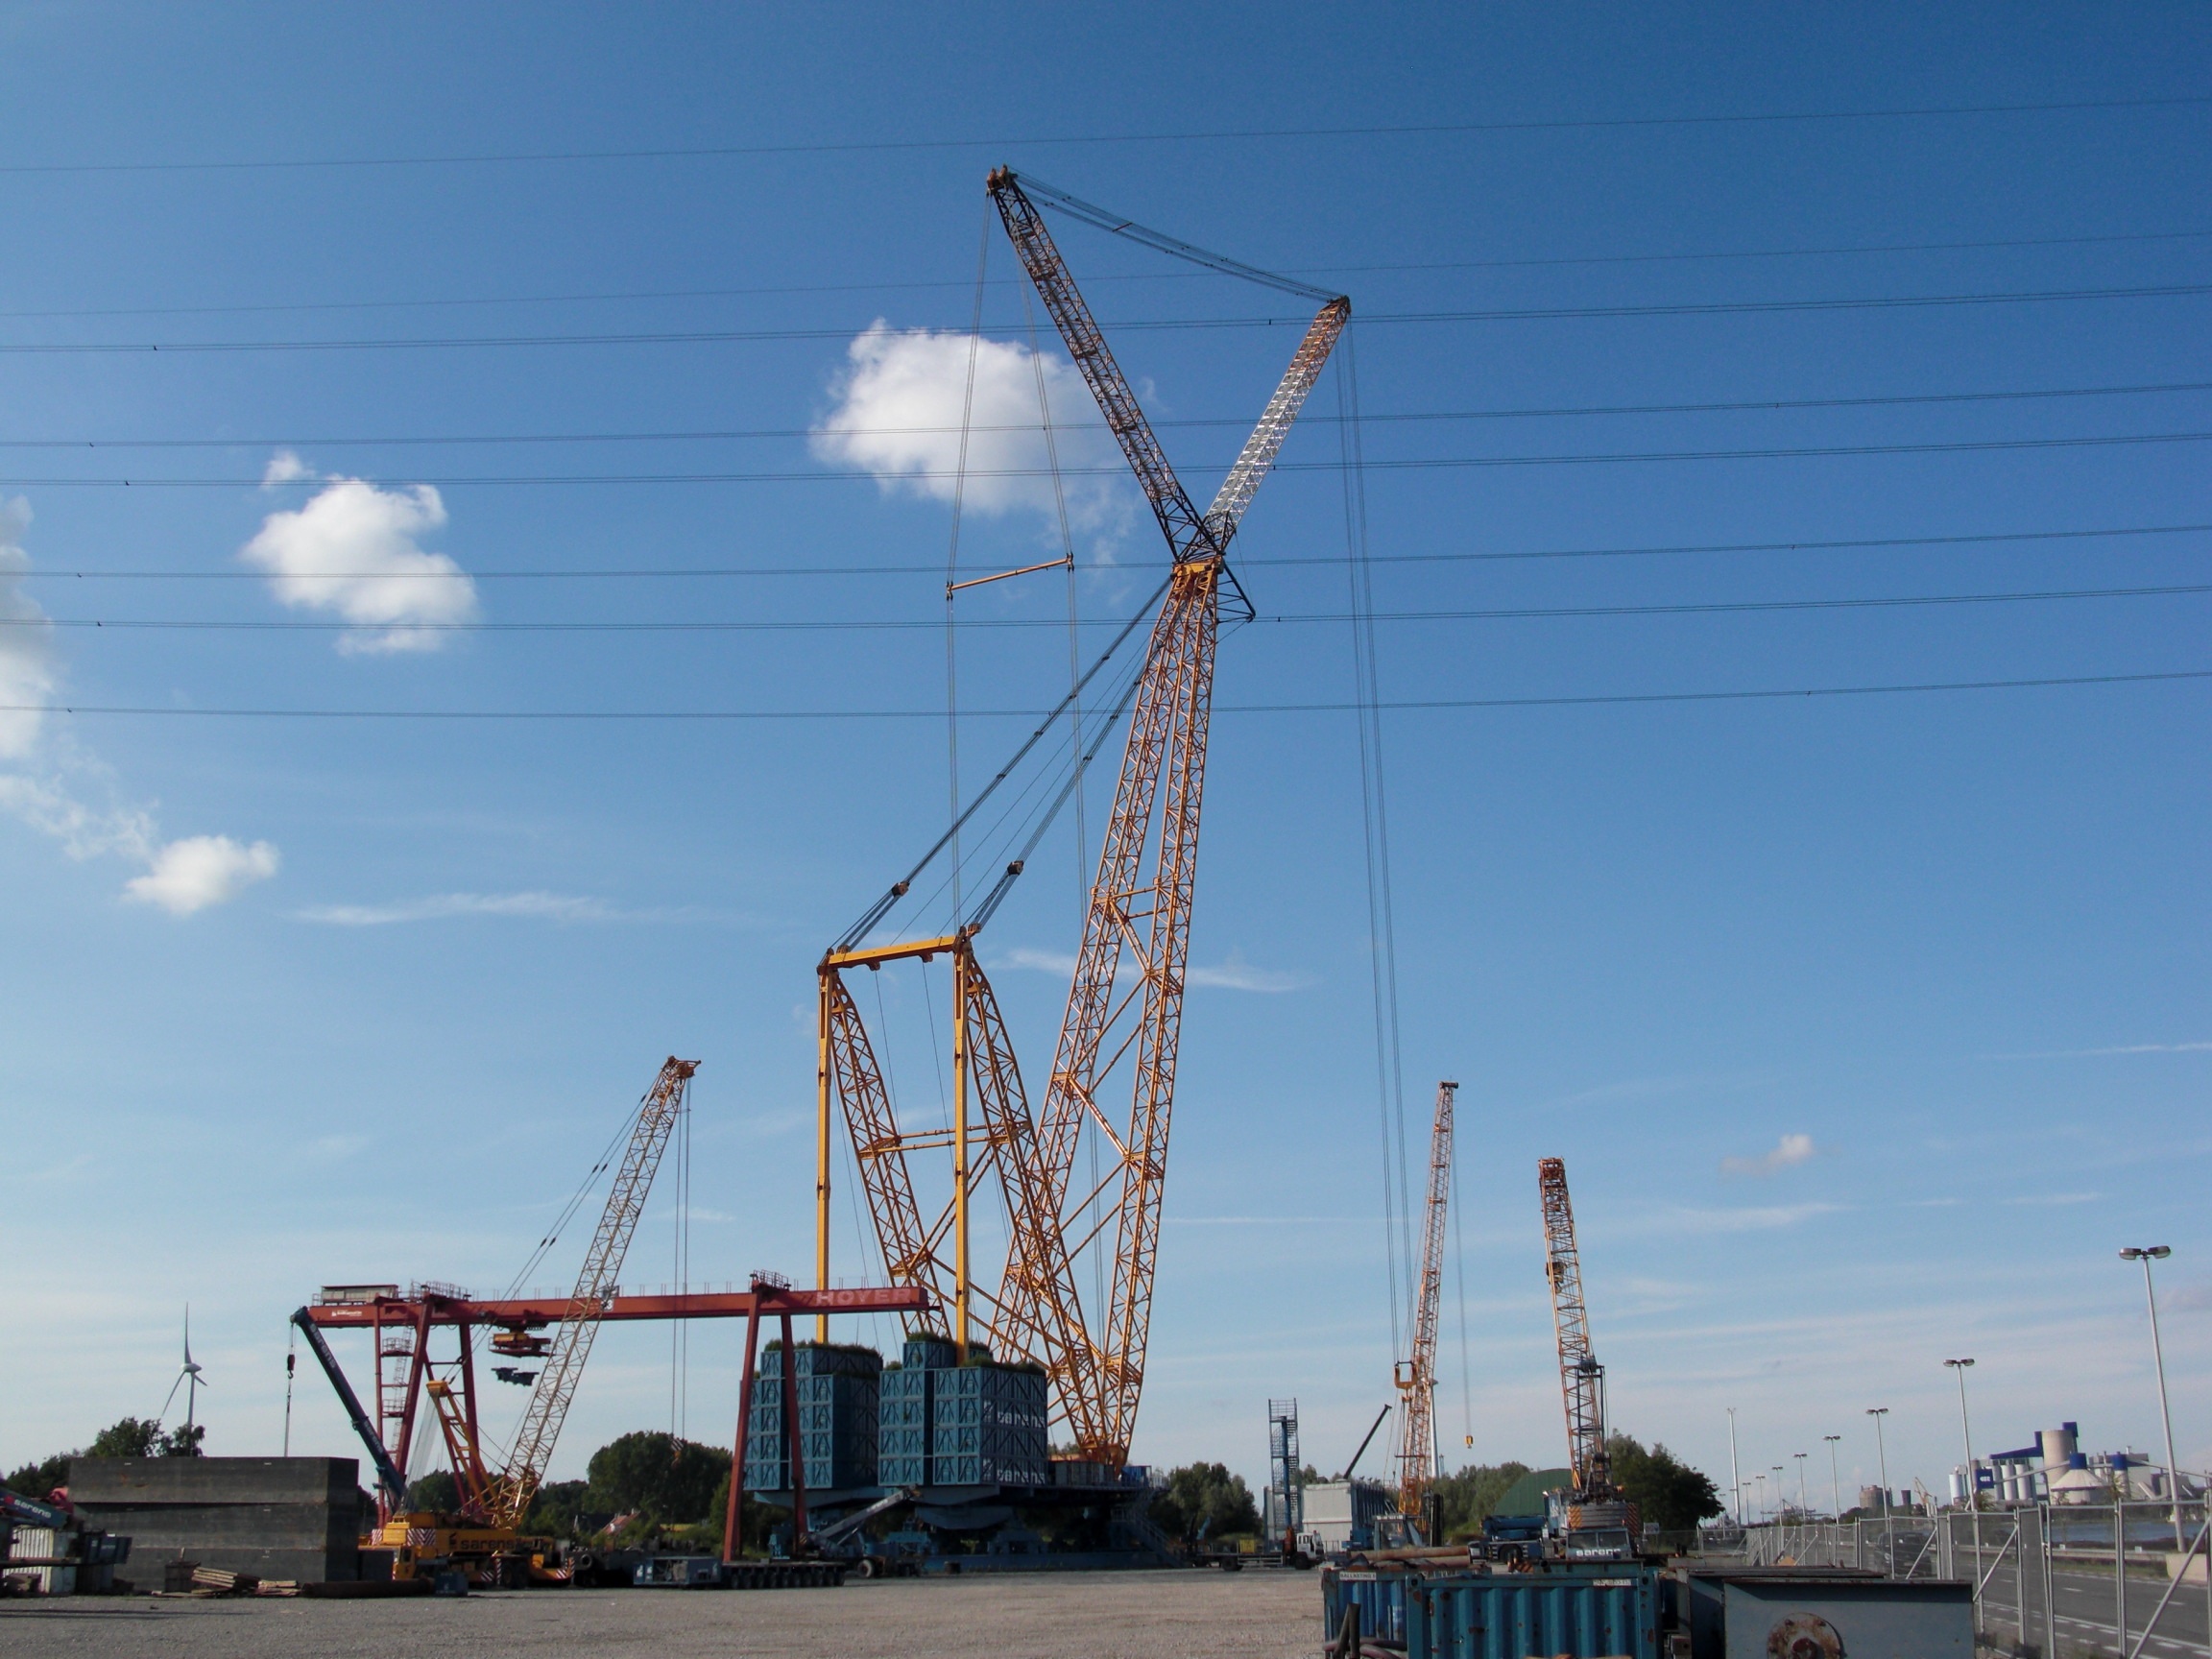 worlds largest crane lift